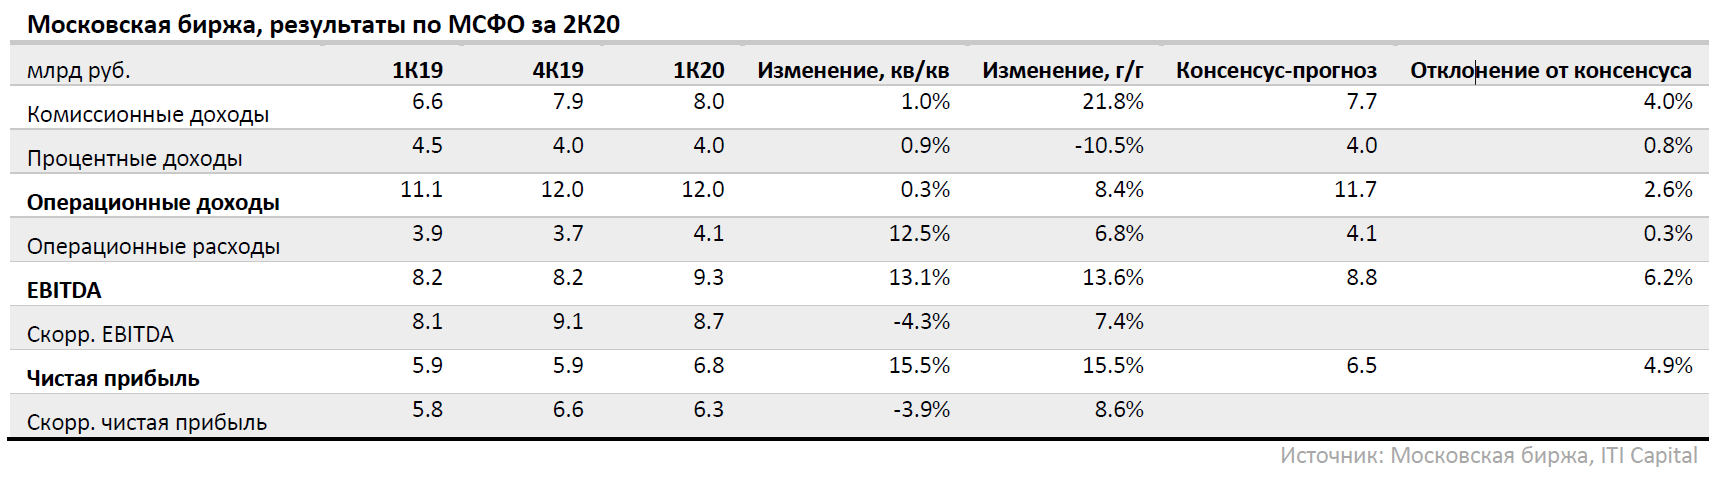 Московская биржа 2К20: нормализация тренда